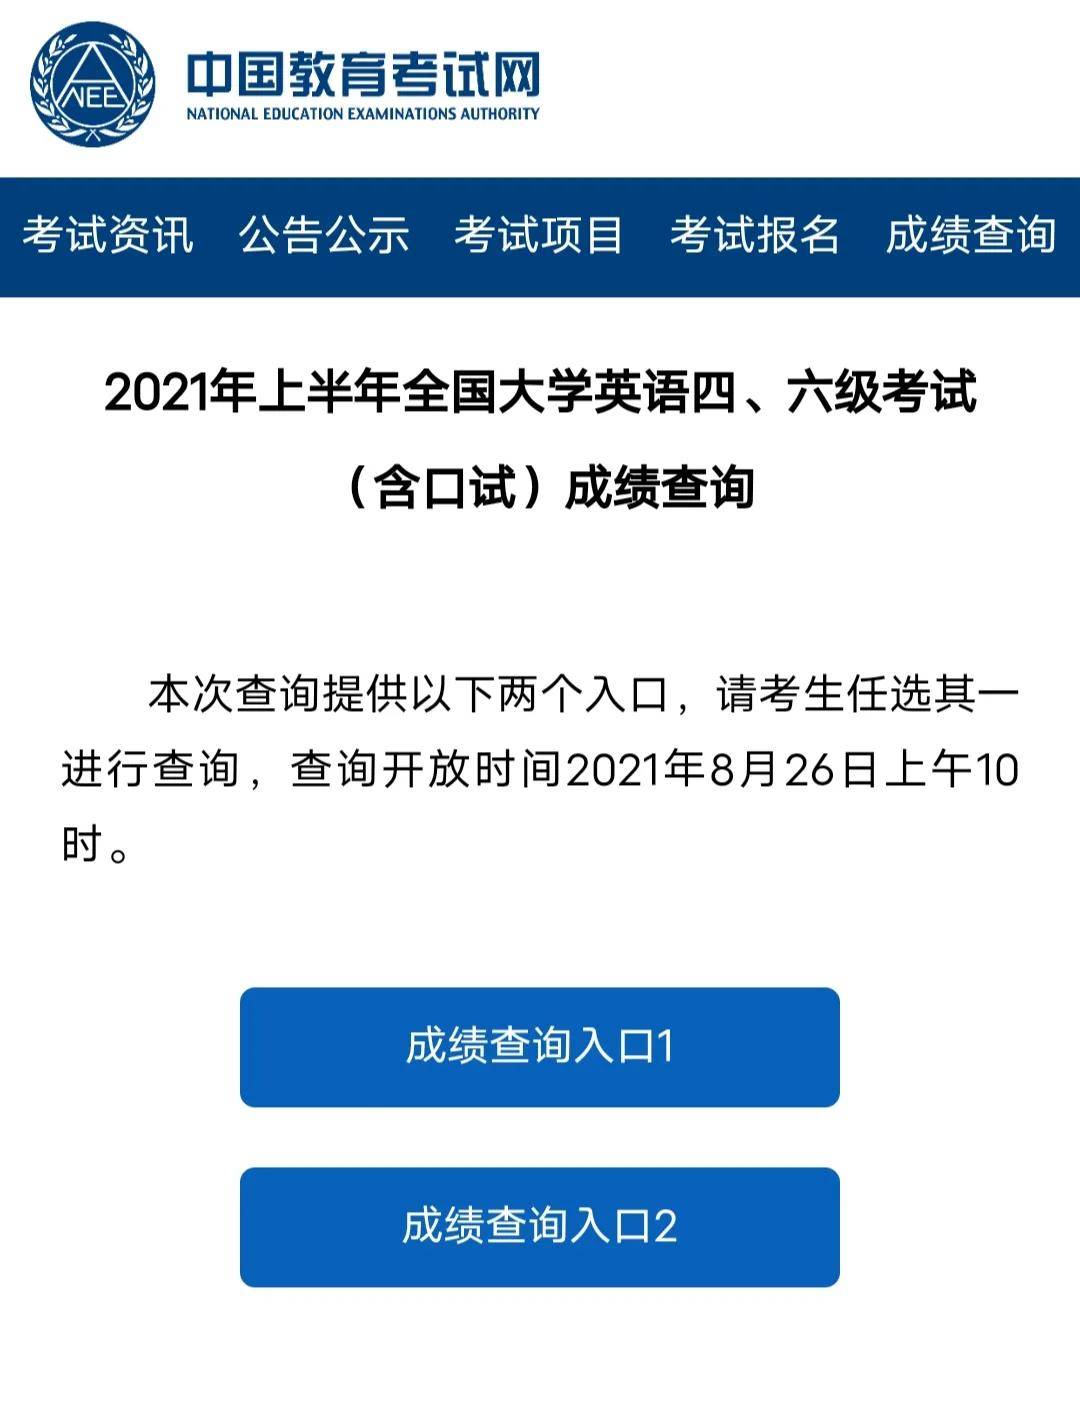 cn/cet 微信小程序:扫描下方小程序码或搜索"中国教育考试网"小程序.